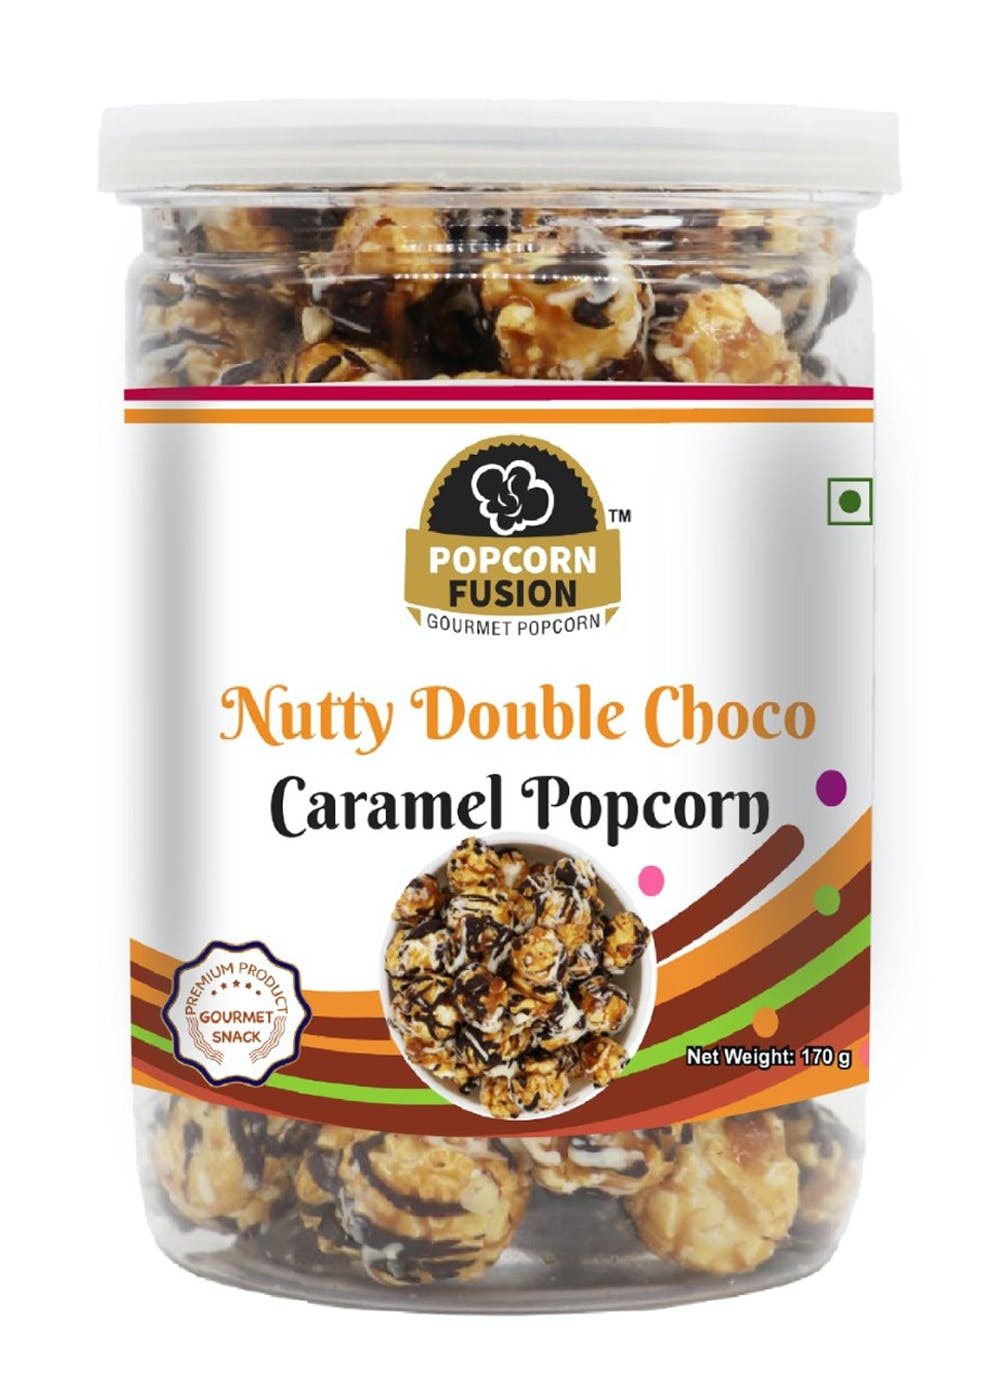 Gourmet Popcorn-Nutty Double Chocolate Caramel Popcorn- 170g